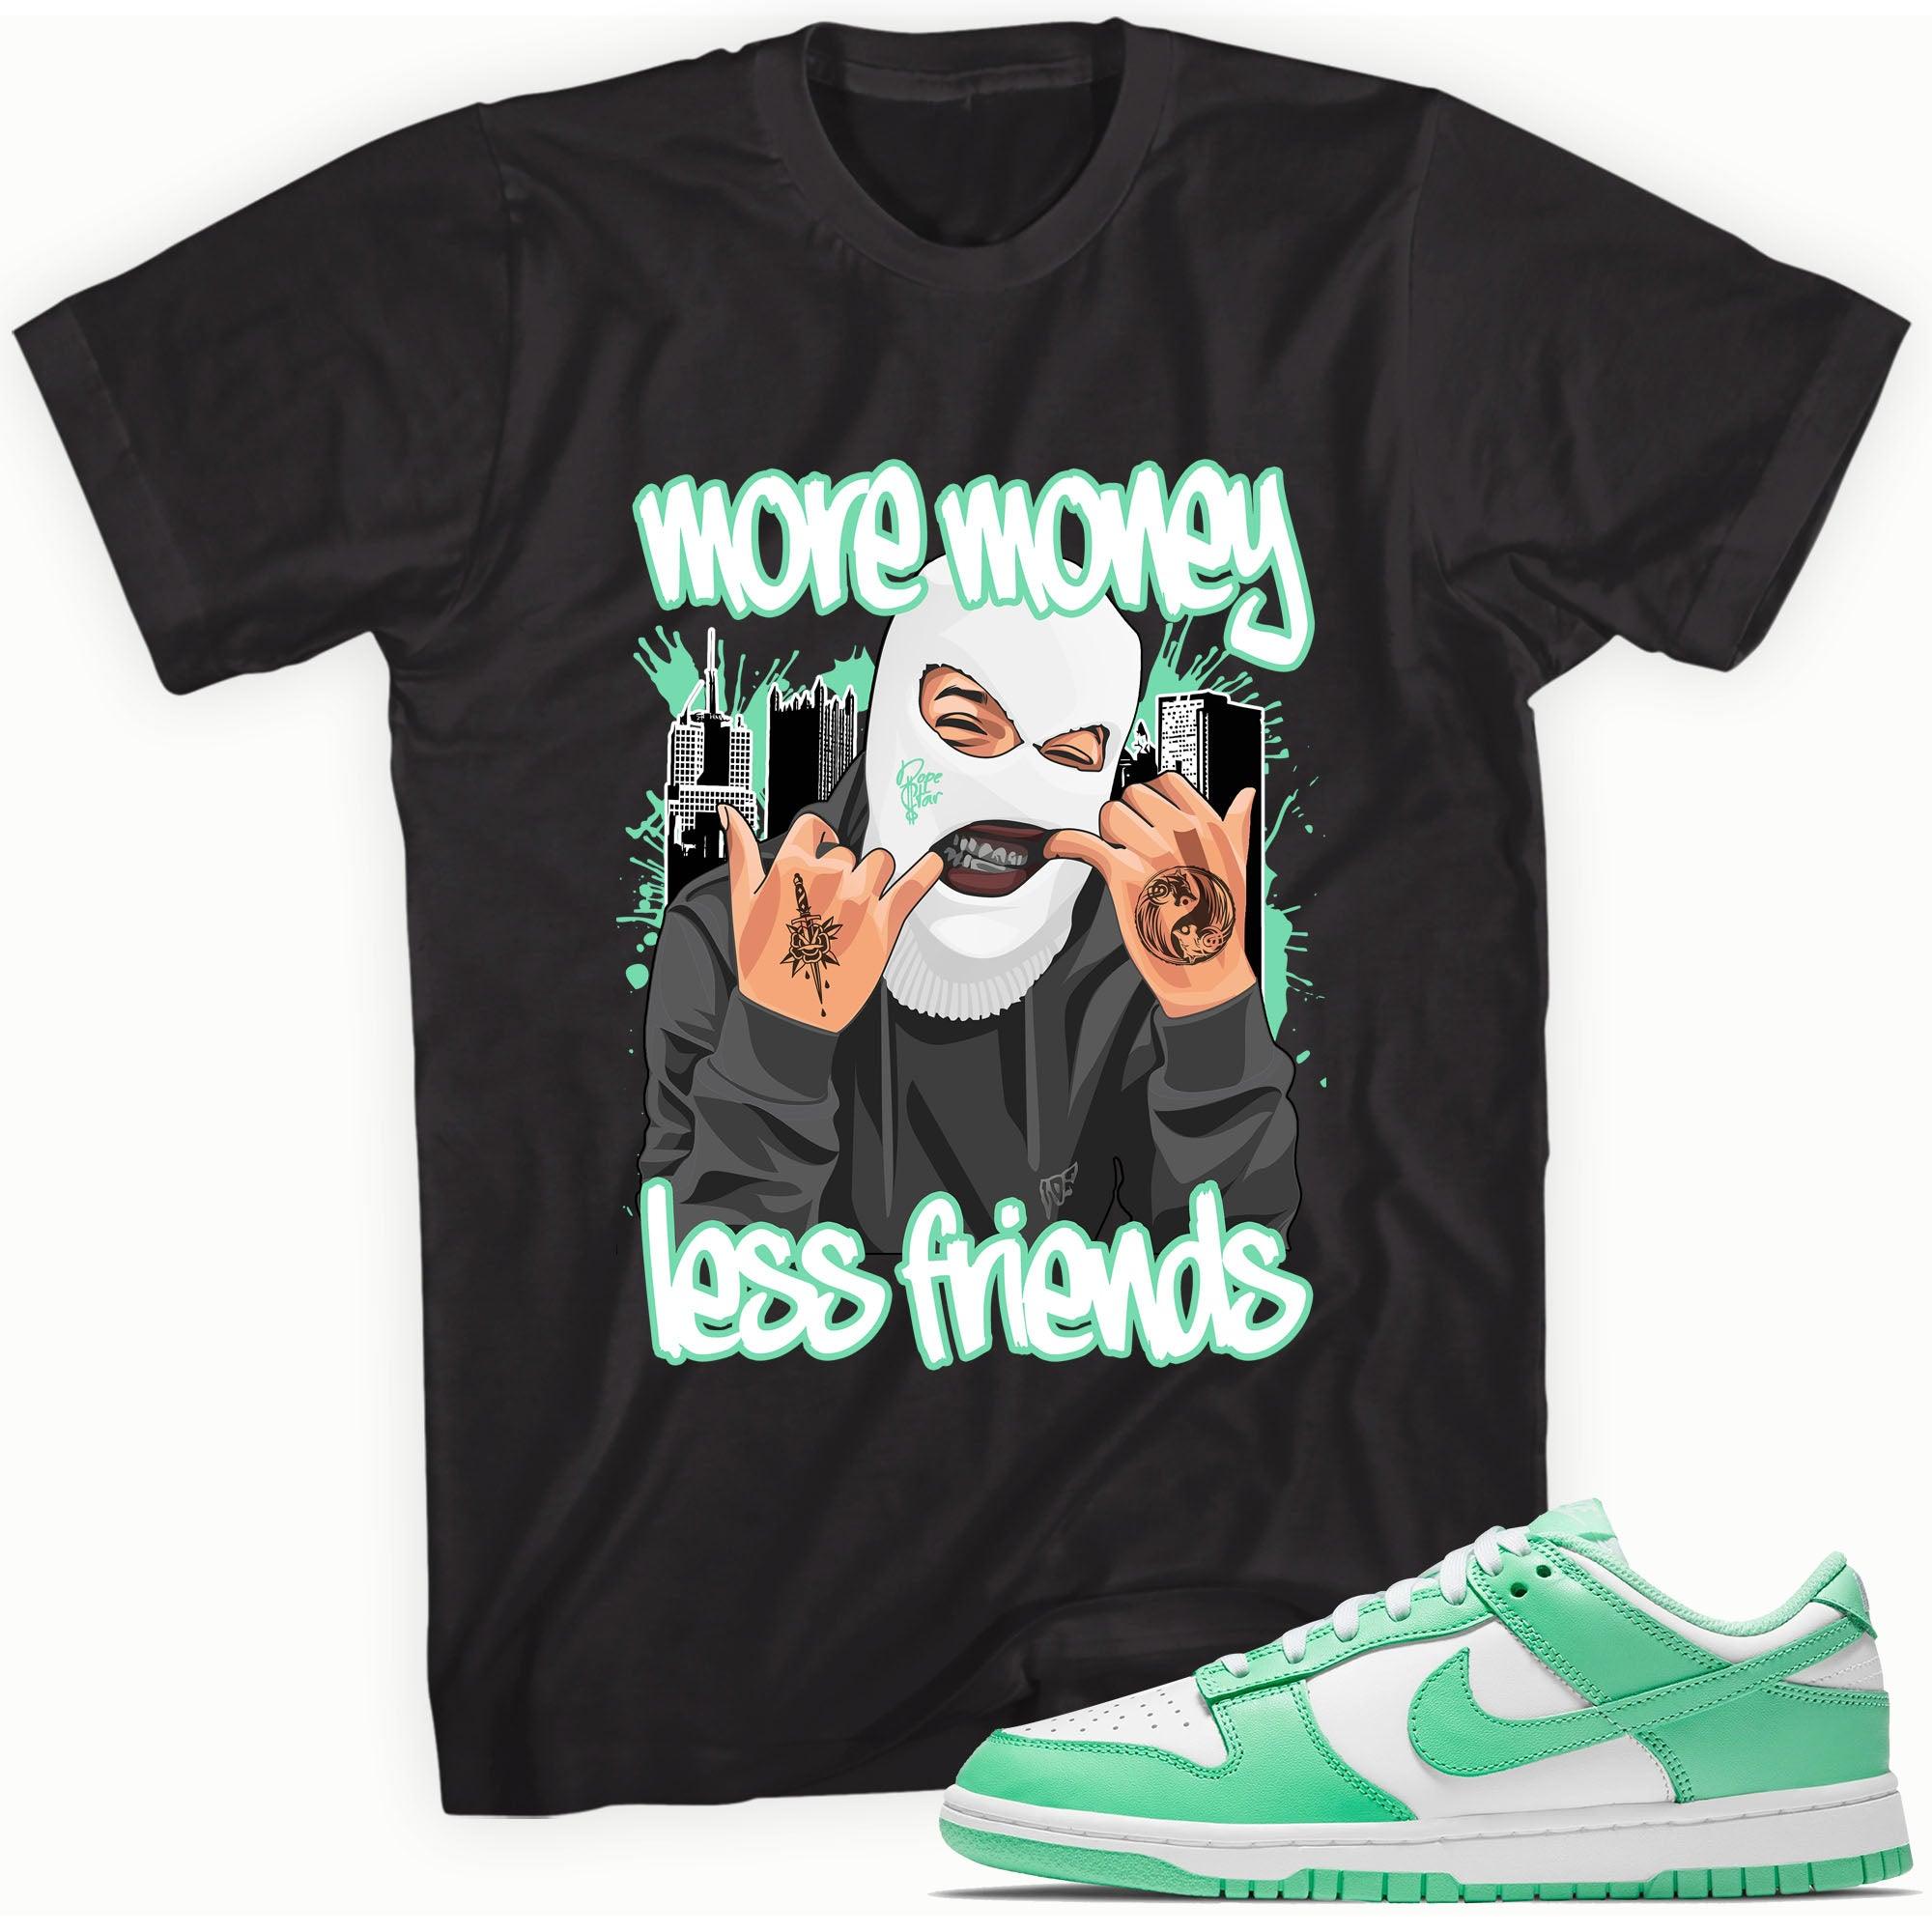 More Money Less Friends Shirt Nike Dunk Low Green Glow photo